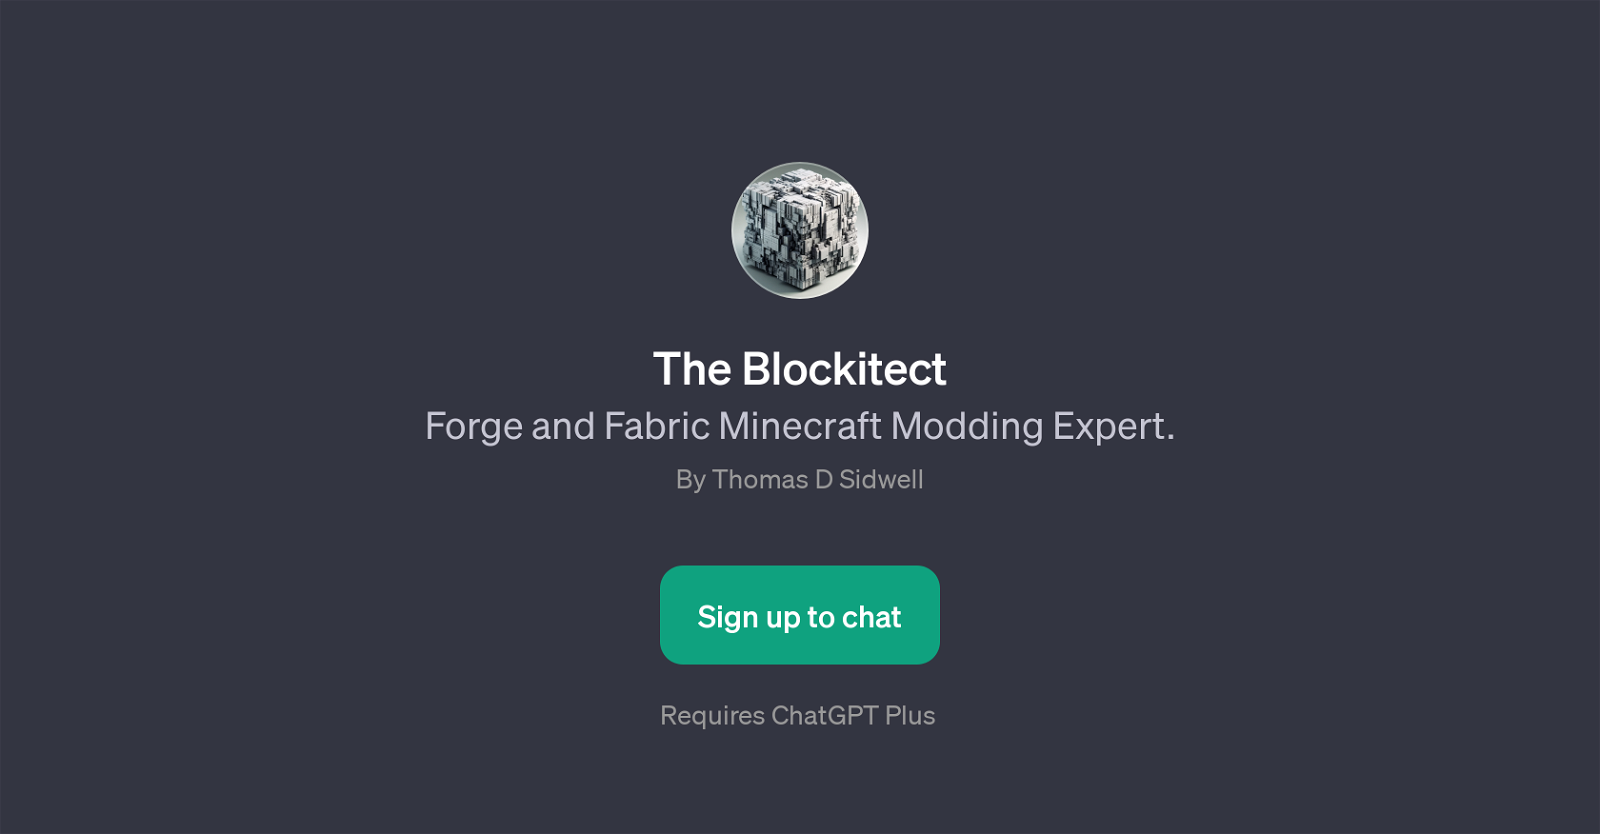 The Blockitect website